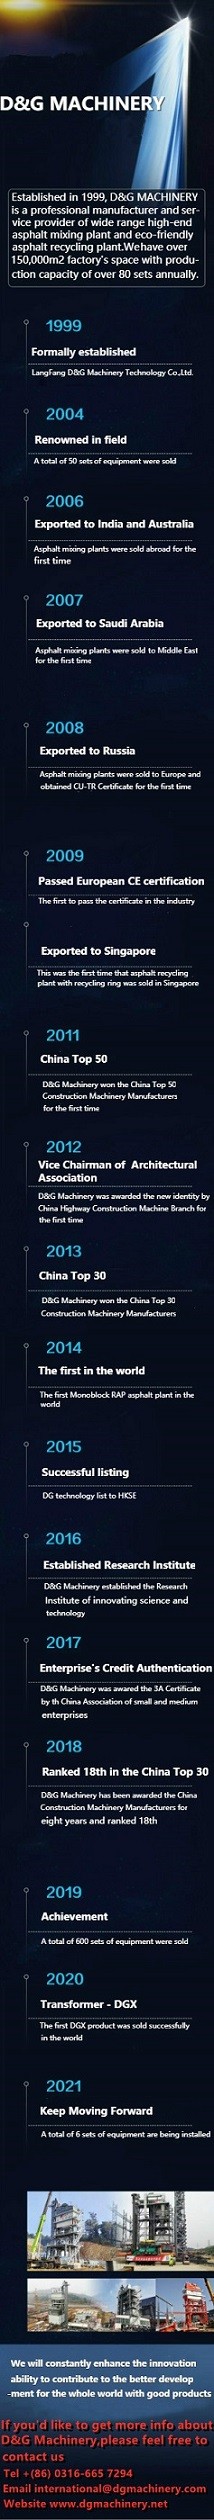 D&G Machinery development history